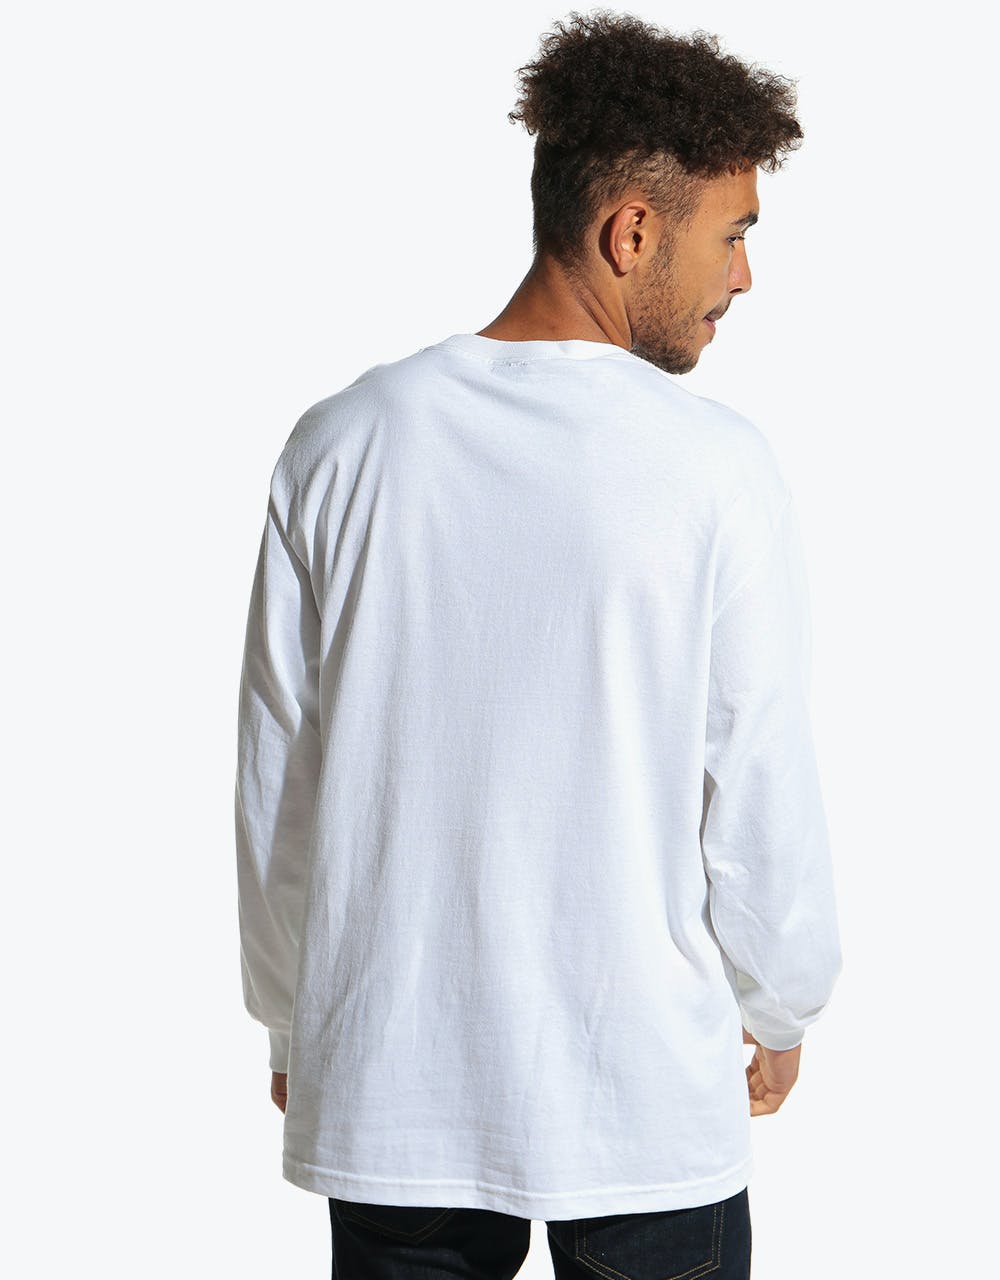 Alltimers Midtown L/S T-Shirt - White